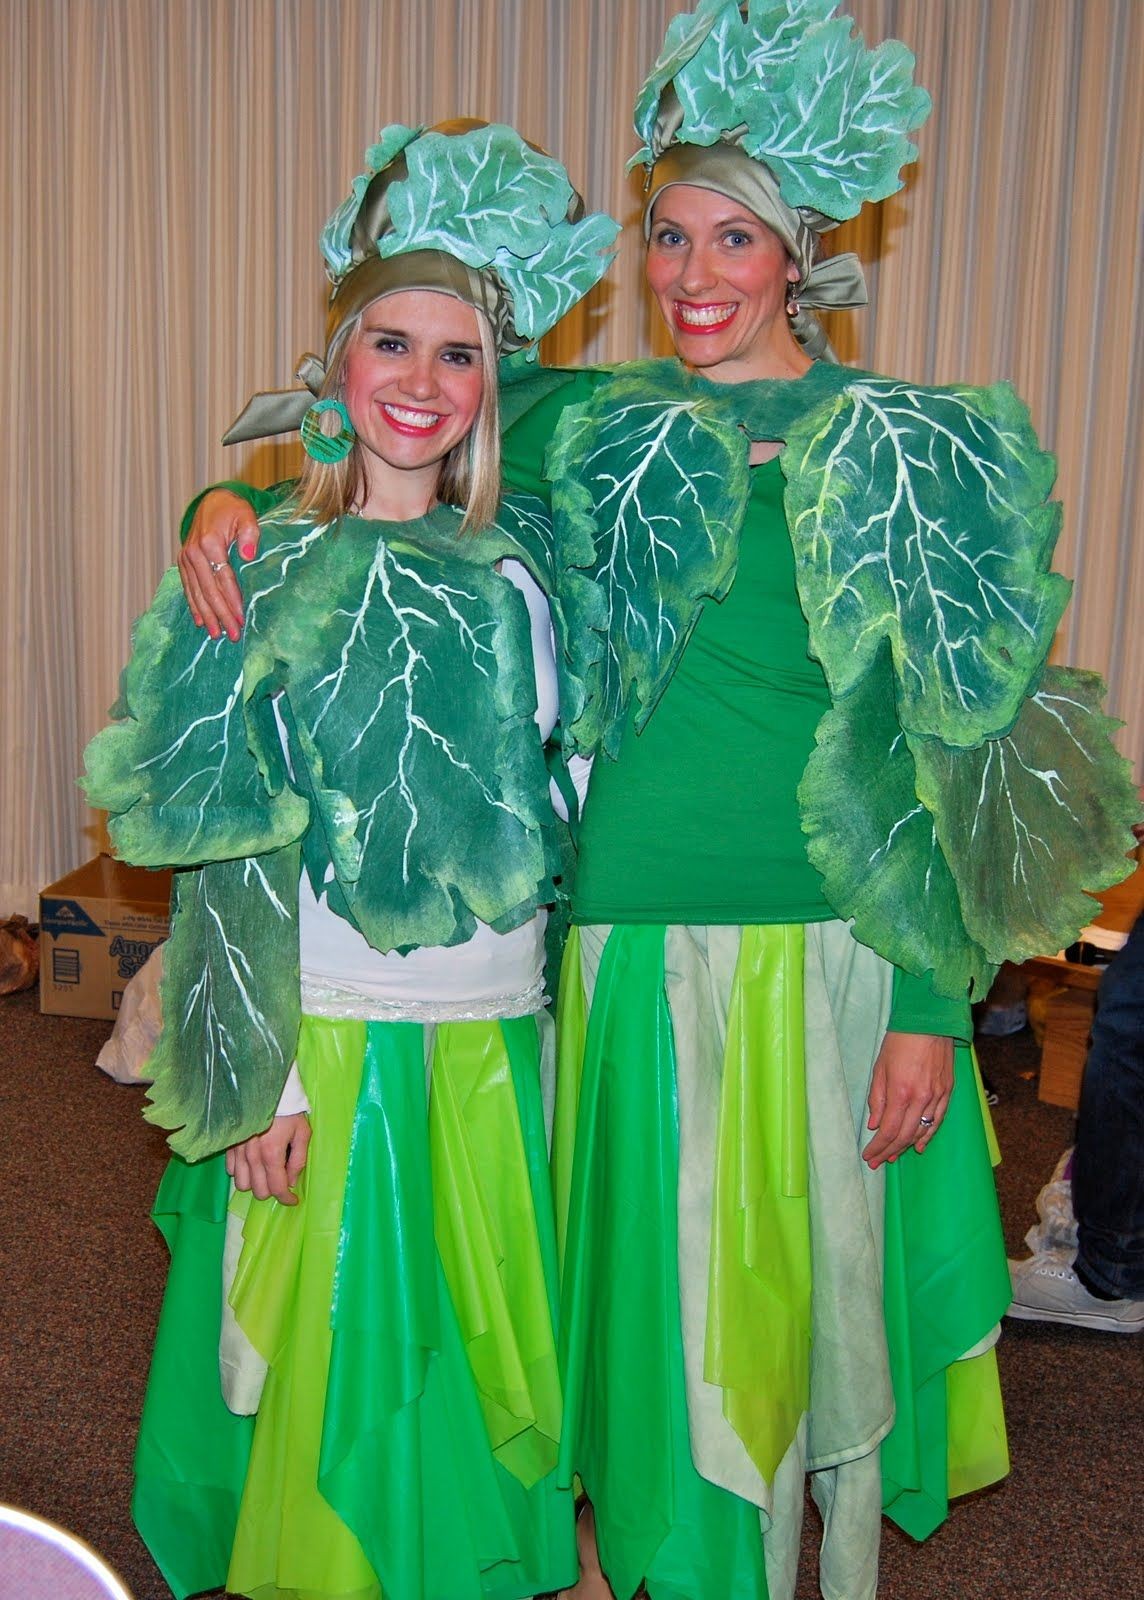 Cool Lettuce Headpieces Capital City Caper Costumes Pinterest Cabbage Costume Ideas